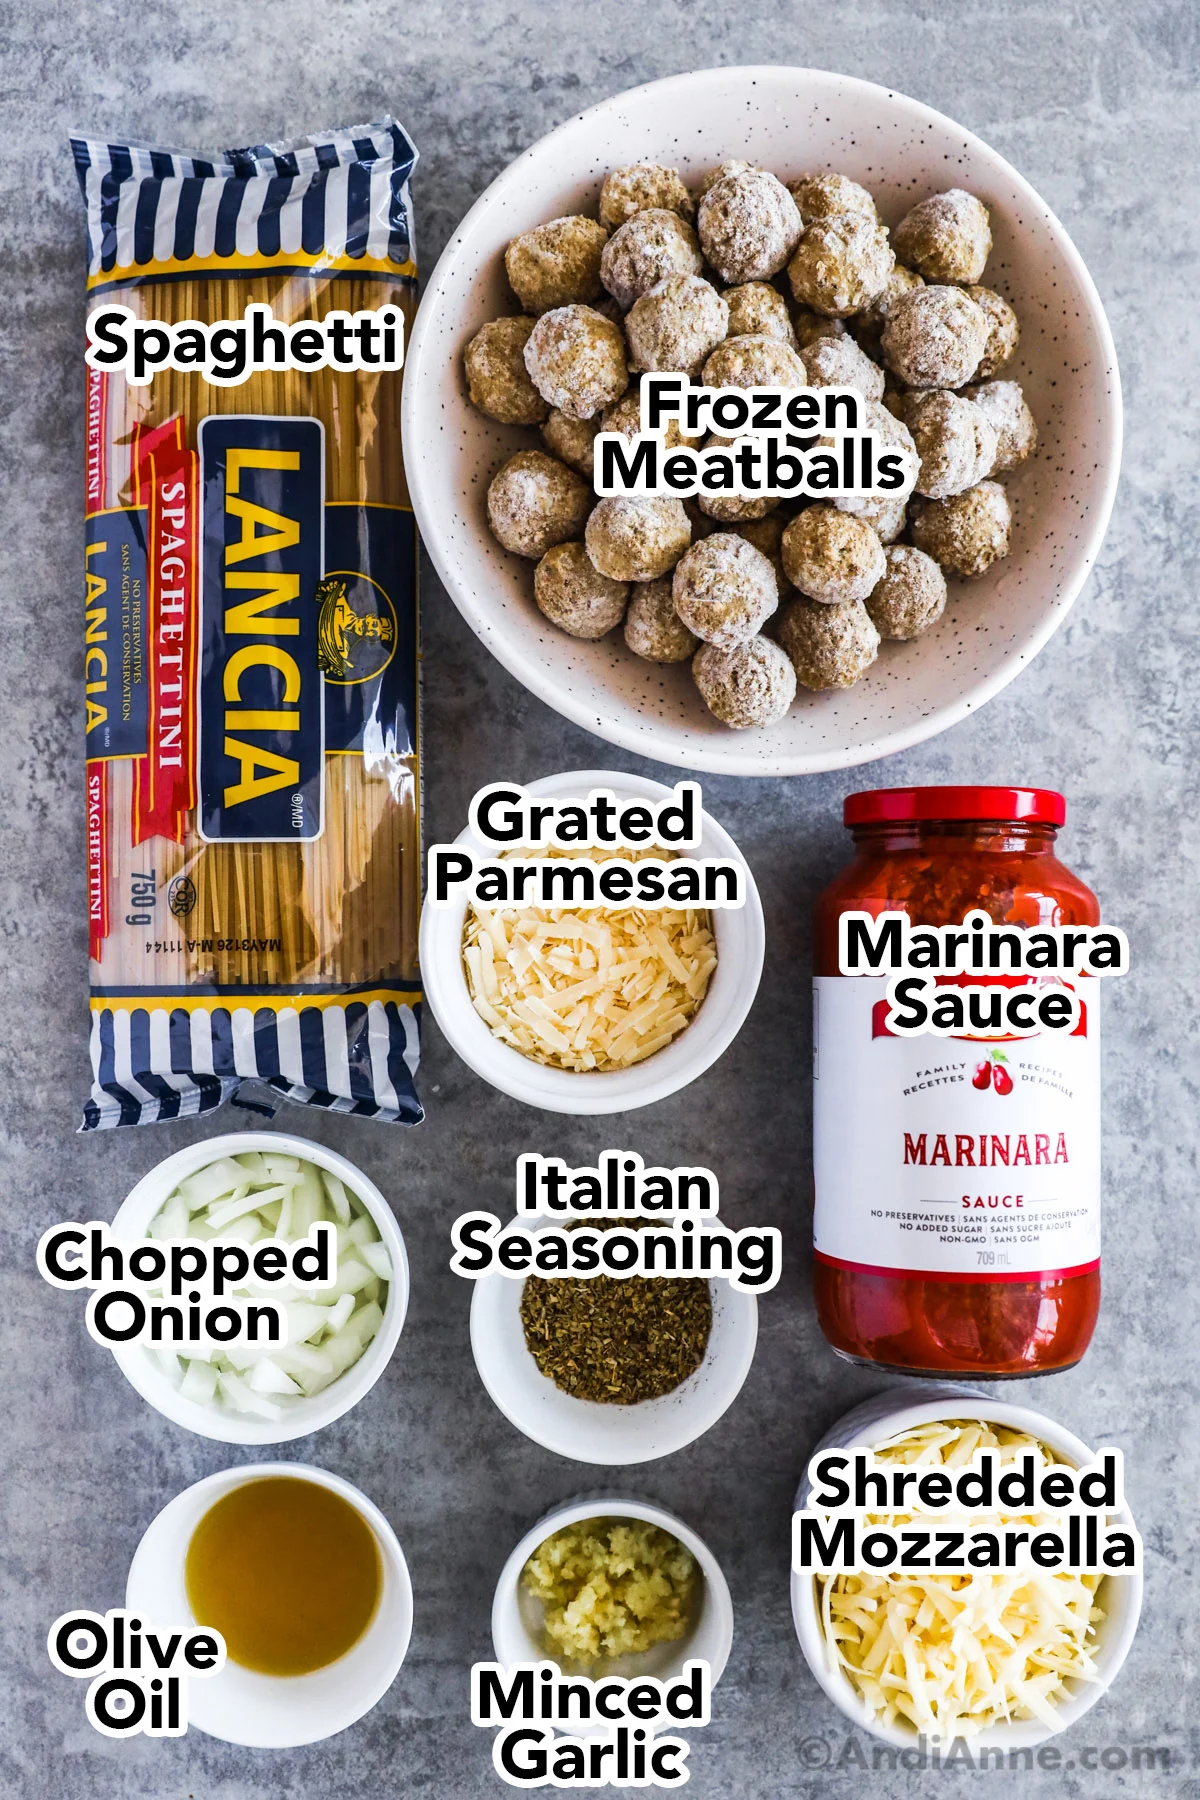 Recipe ingredients in bowls including frozen meatballs, packaged spaghetti, jar of marinara, bowls of grated parmesan, shredded mozzarella, chopped onion, Italian seasoning, olive oil, an minced garlic.